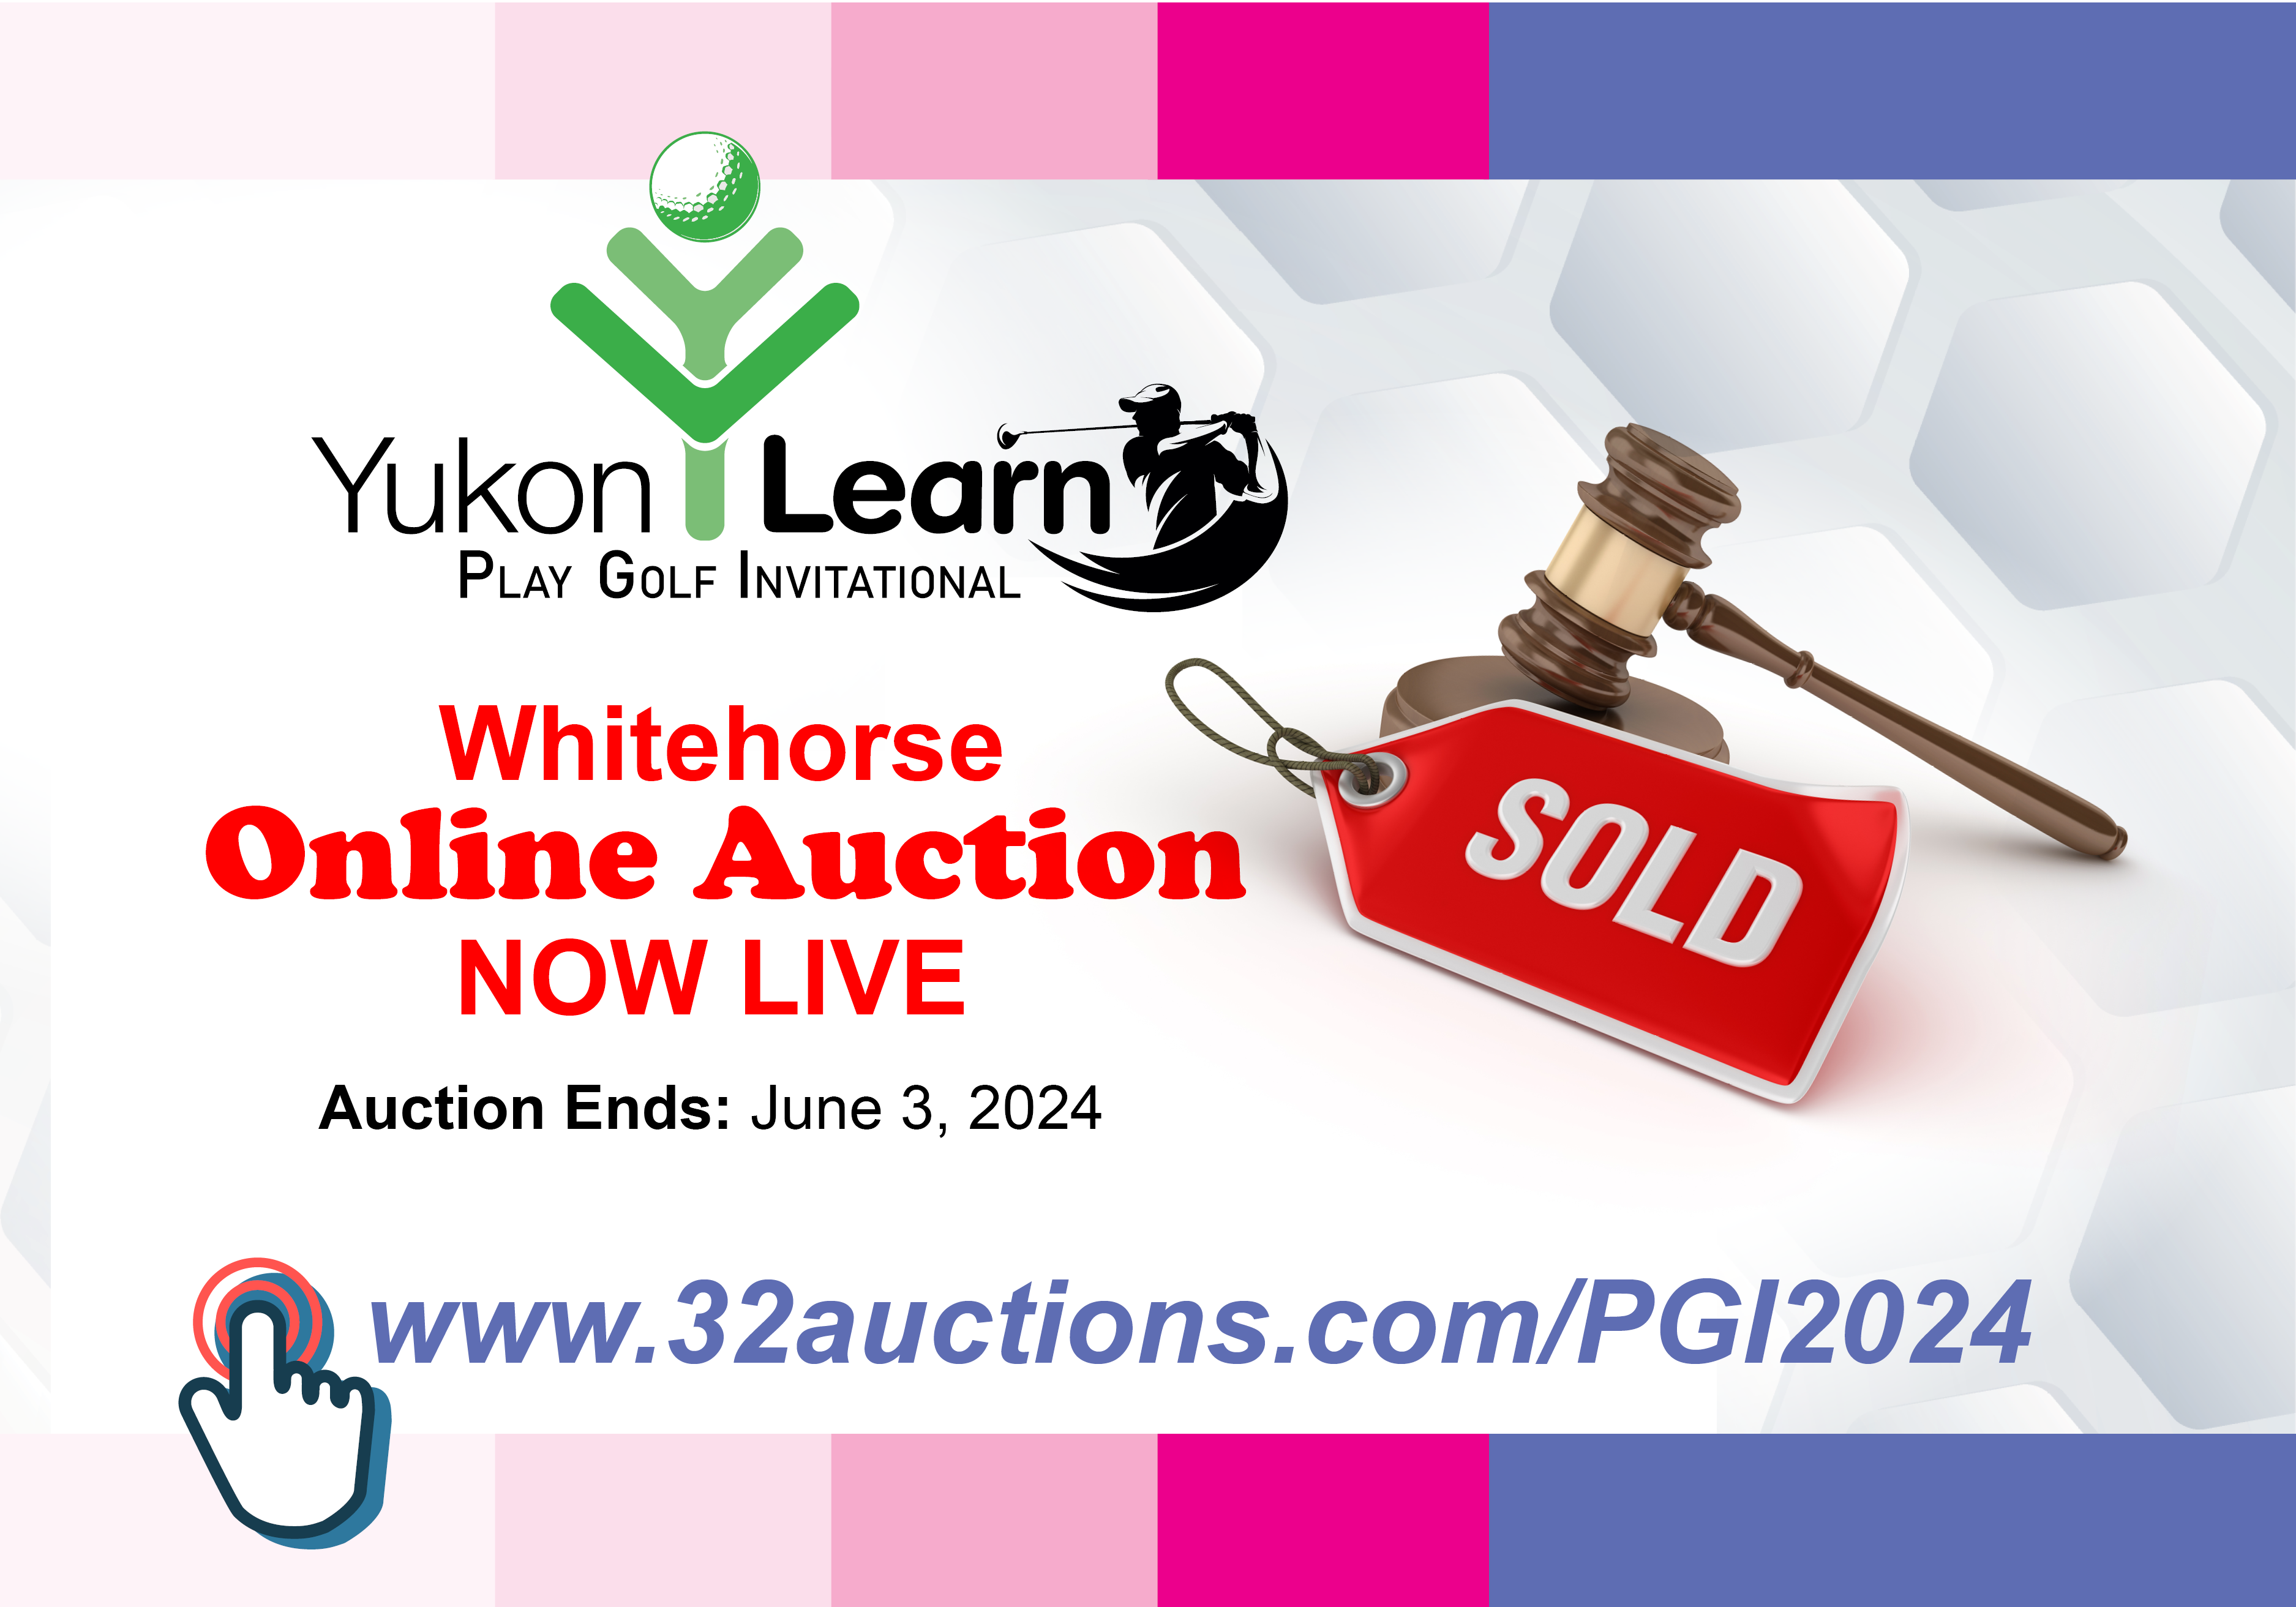 Online Auction Link